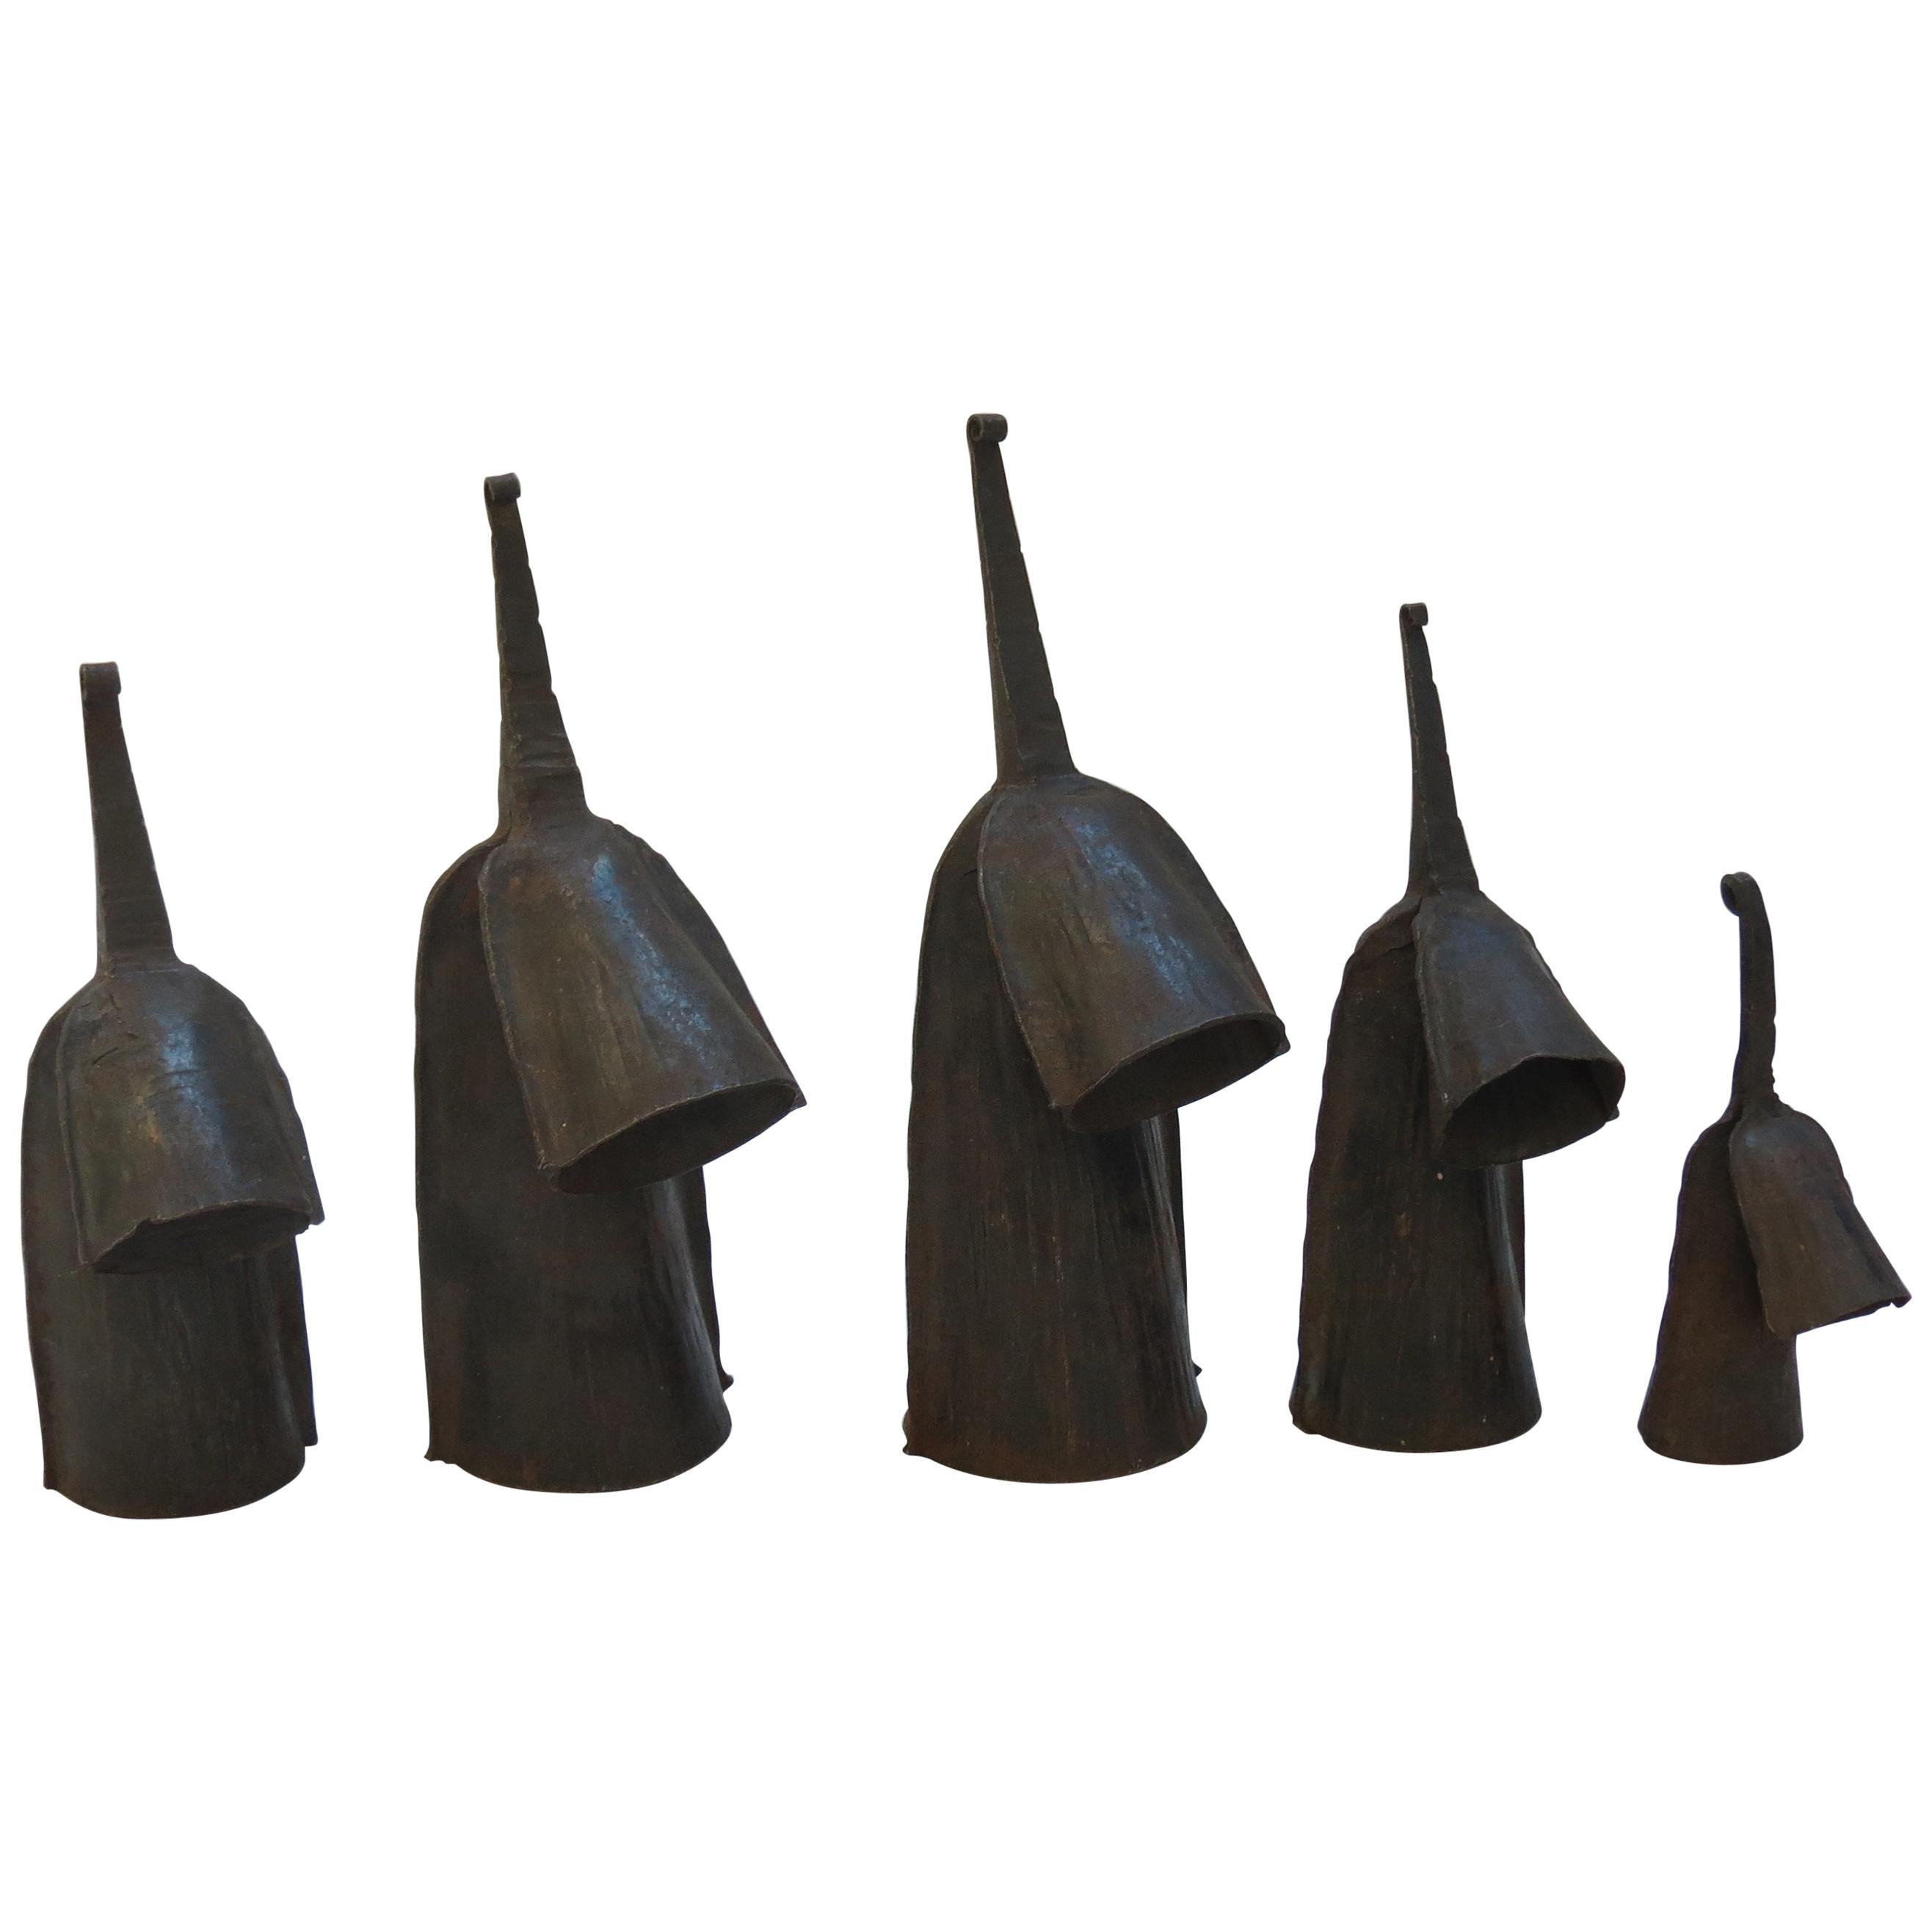 Set of 5 Vintage Metal Hand Produced Decorative Agogo Bells from Ghana